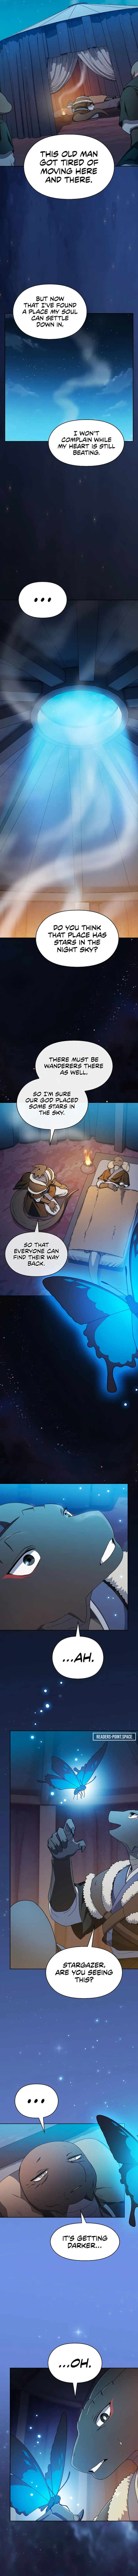 The Nebula’s Civilization - Chapter 27 Page 4